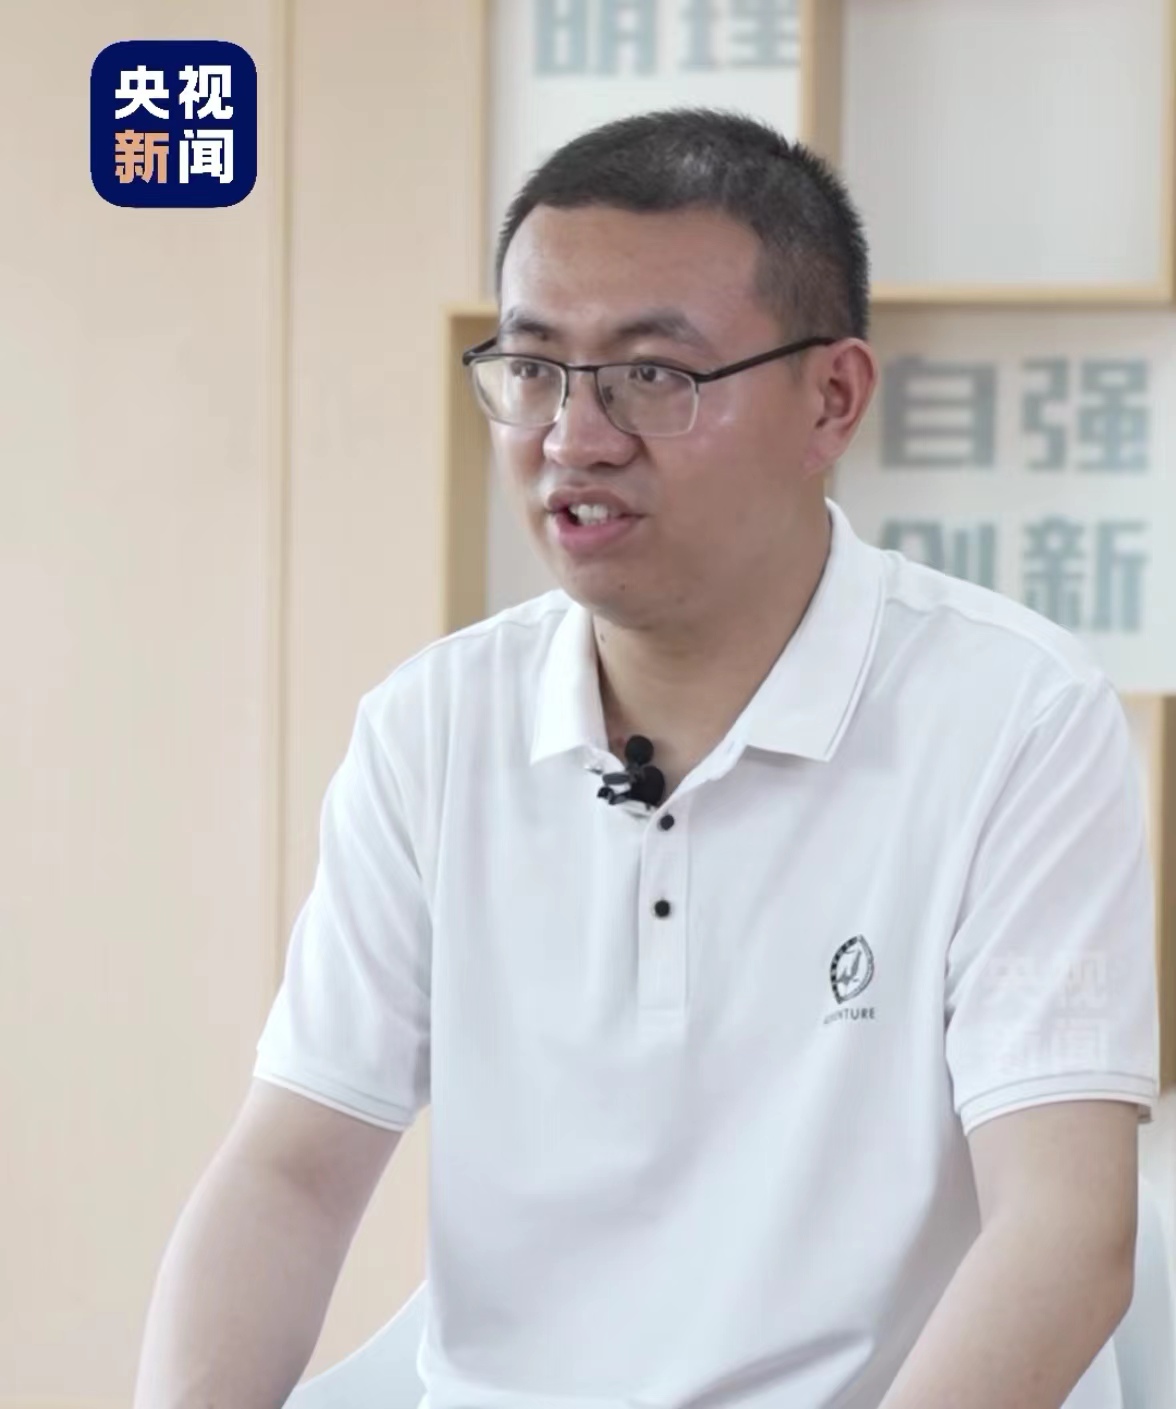 Wang Runqiu, Jiang Ping's math teacher, in an interview with China Media Group. /CMG